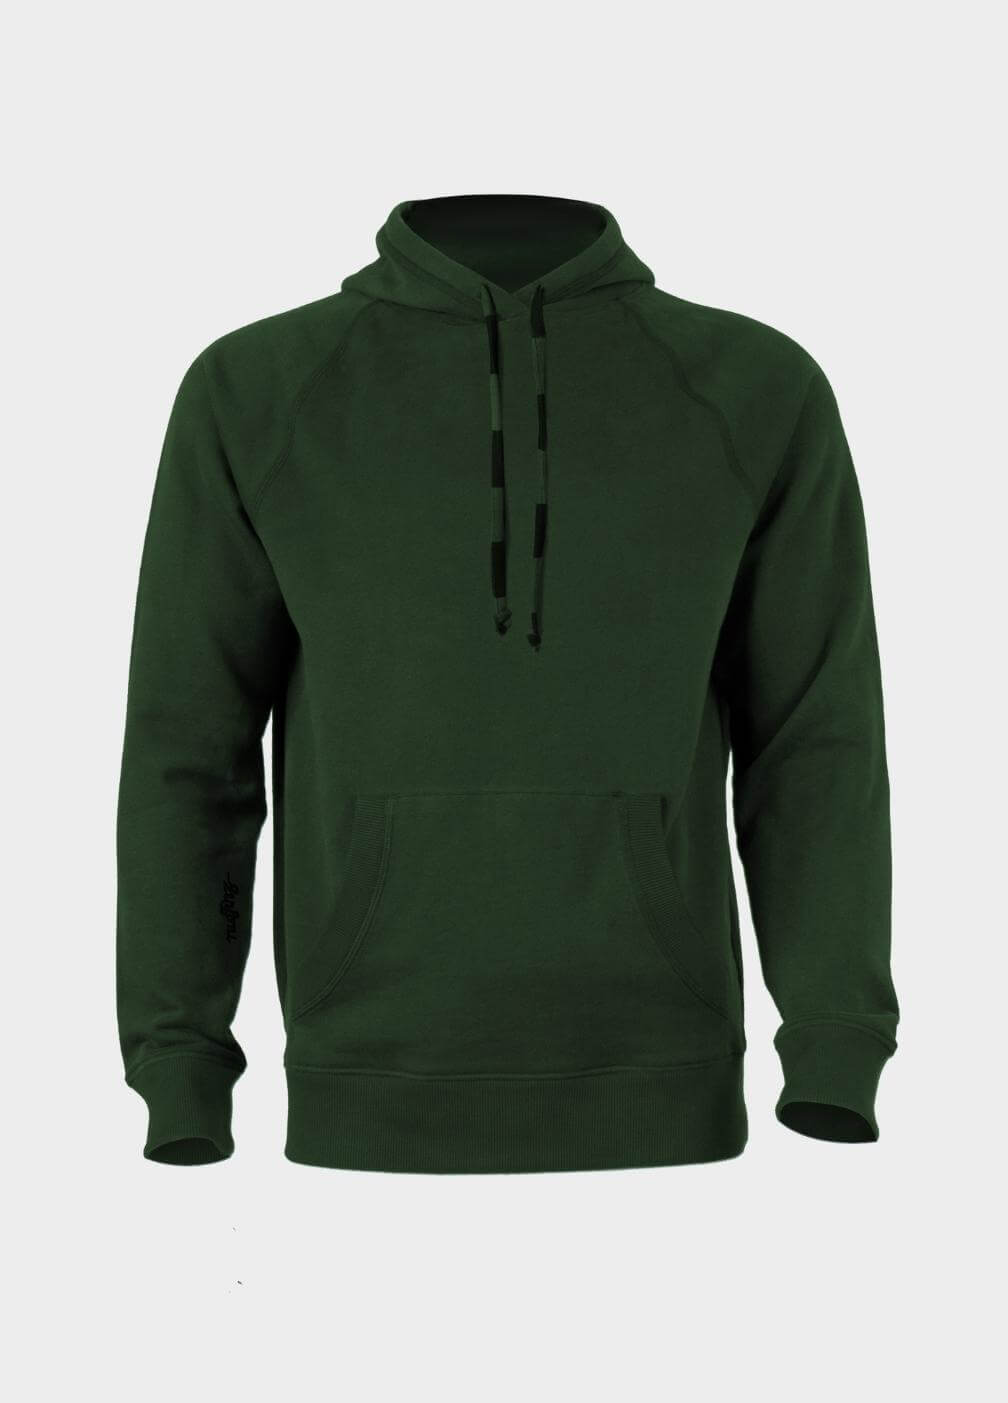 nuffinz menswear- hoodies - rosin green hoodie - 100% organic cotton - carbonized - green